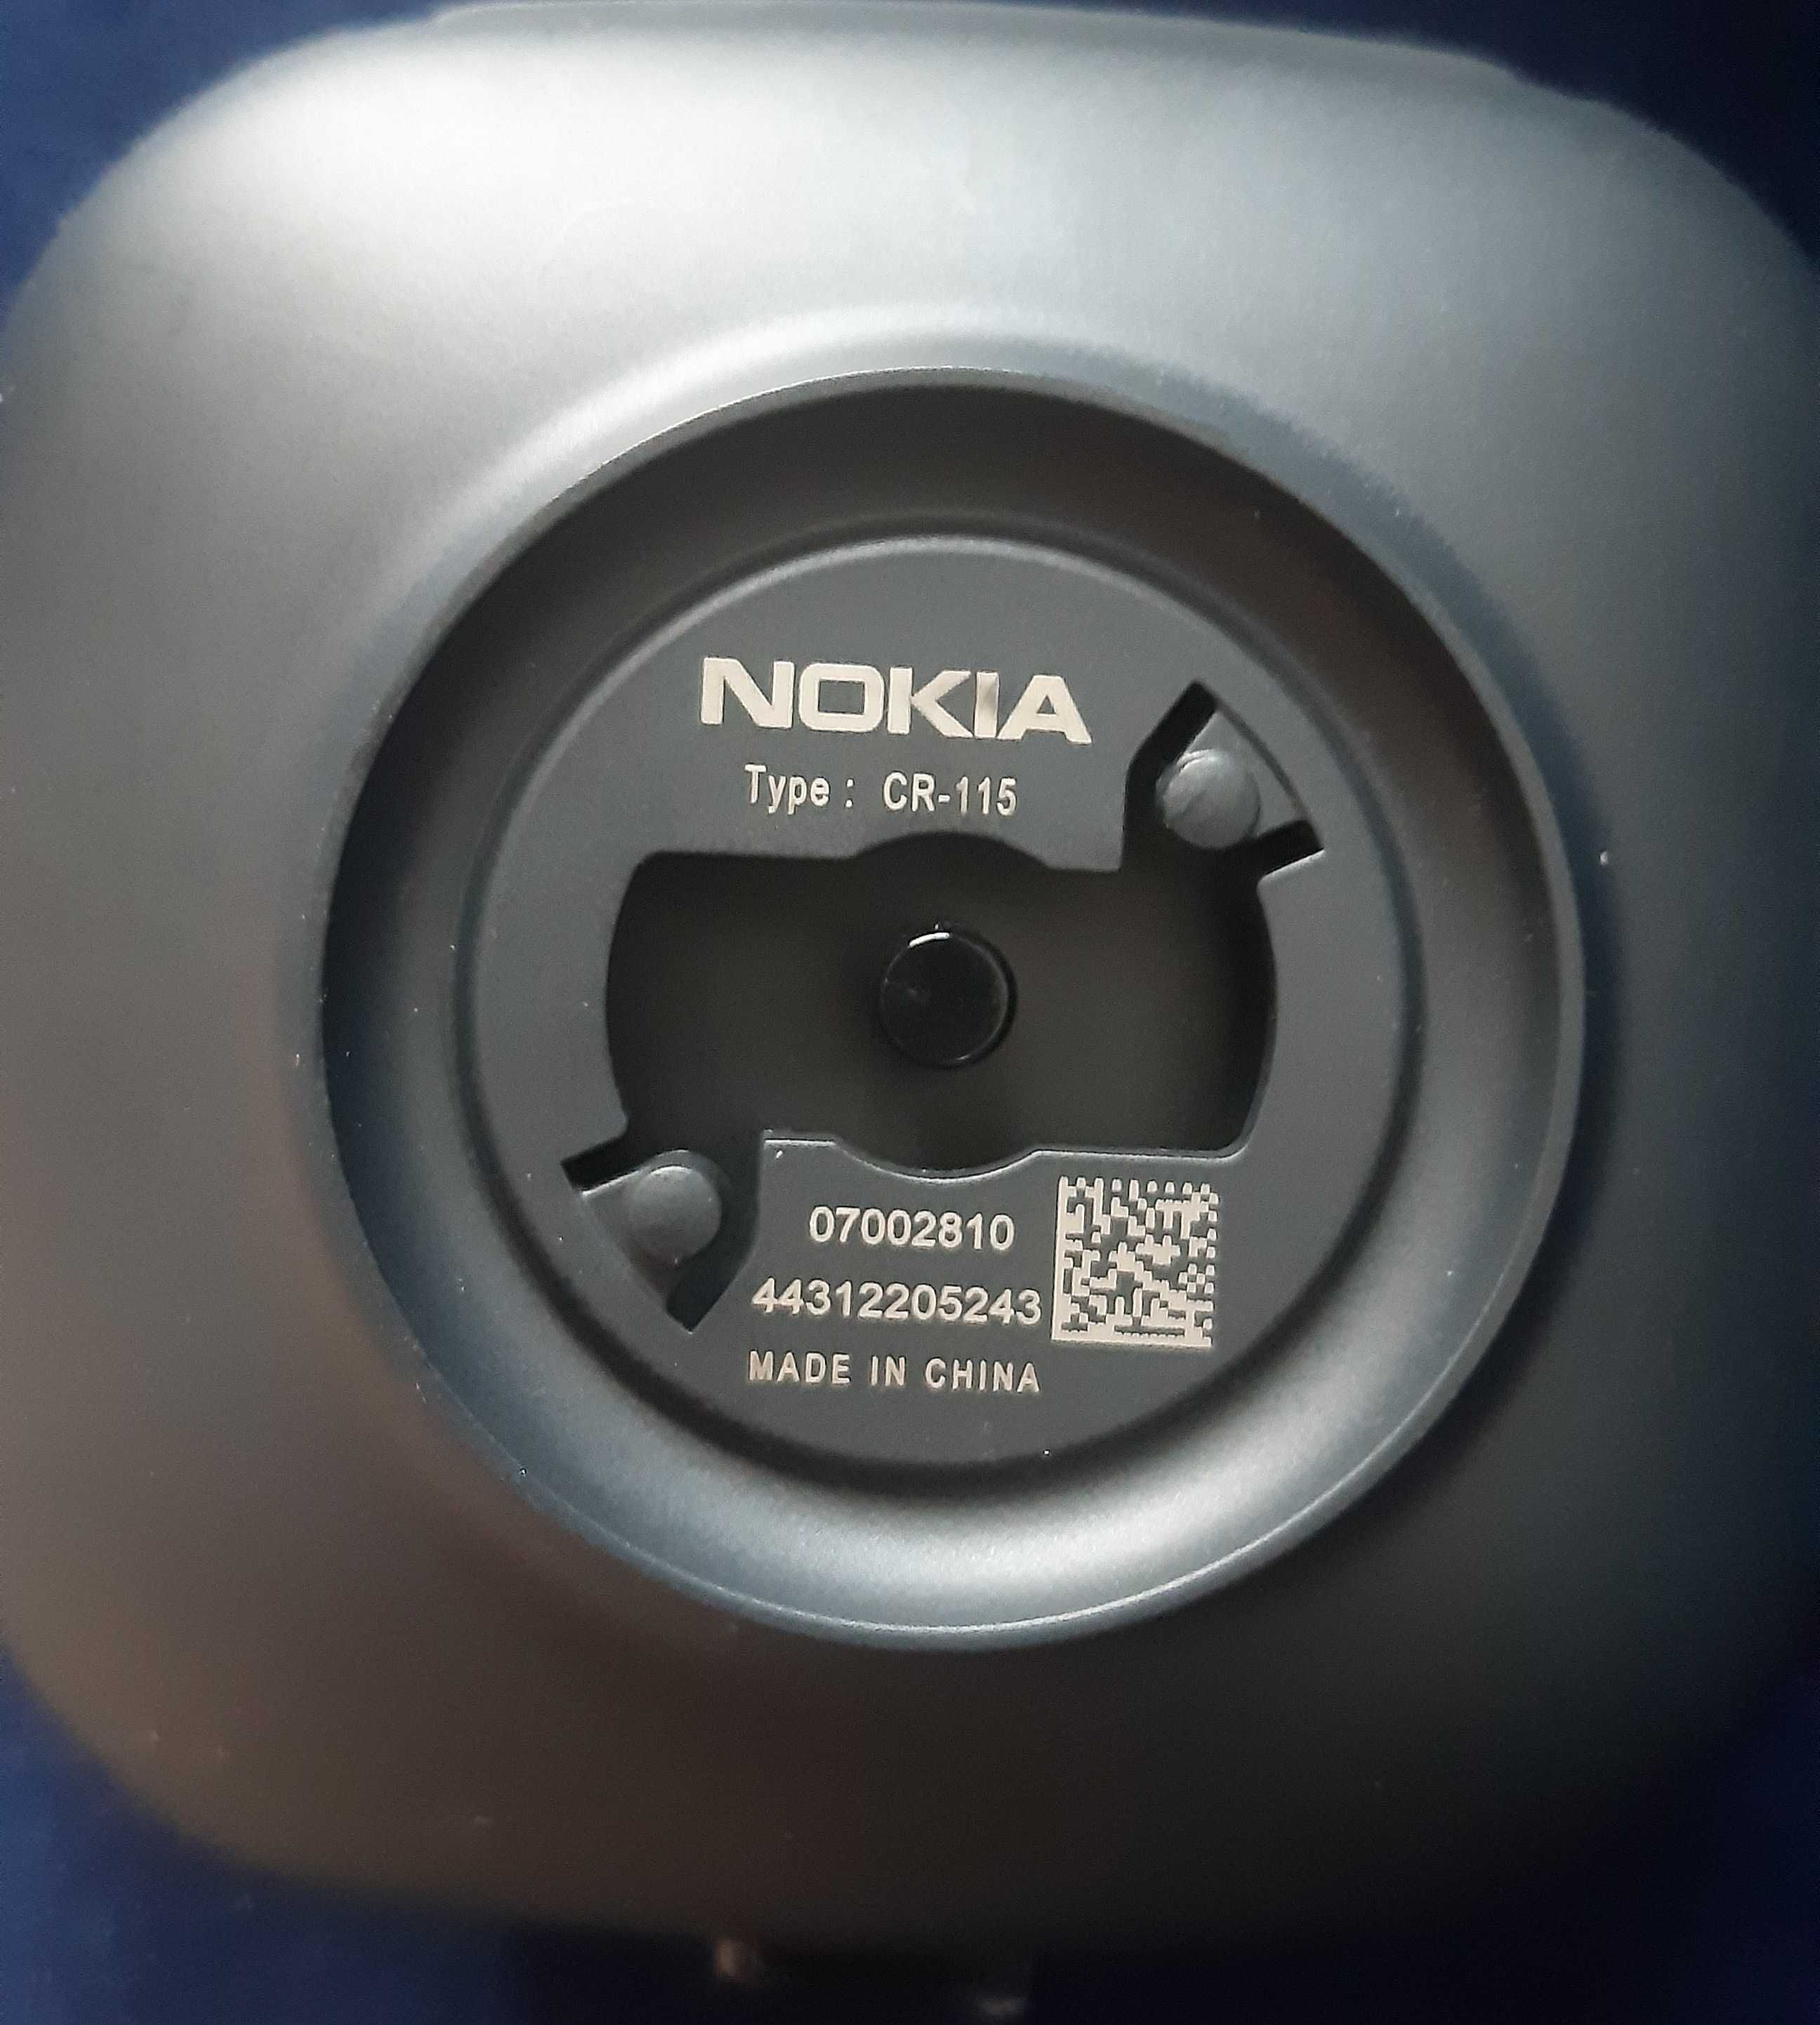 Uchwyt na telefon do auta marki Nokia